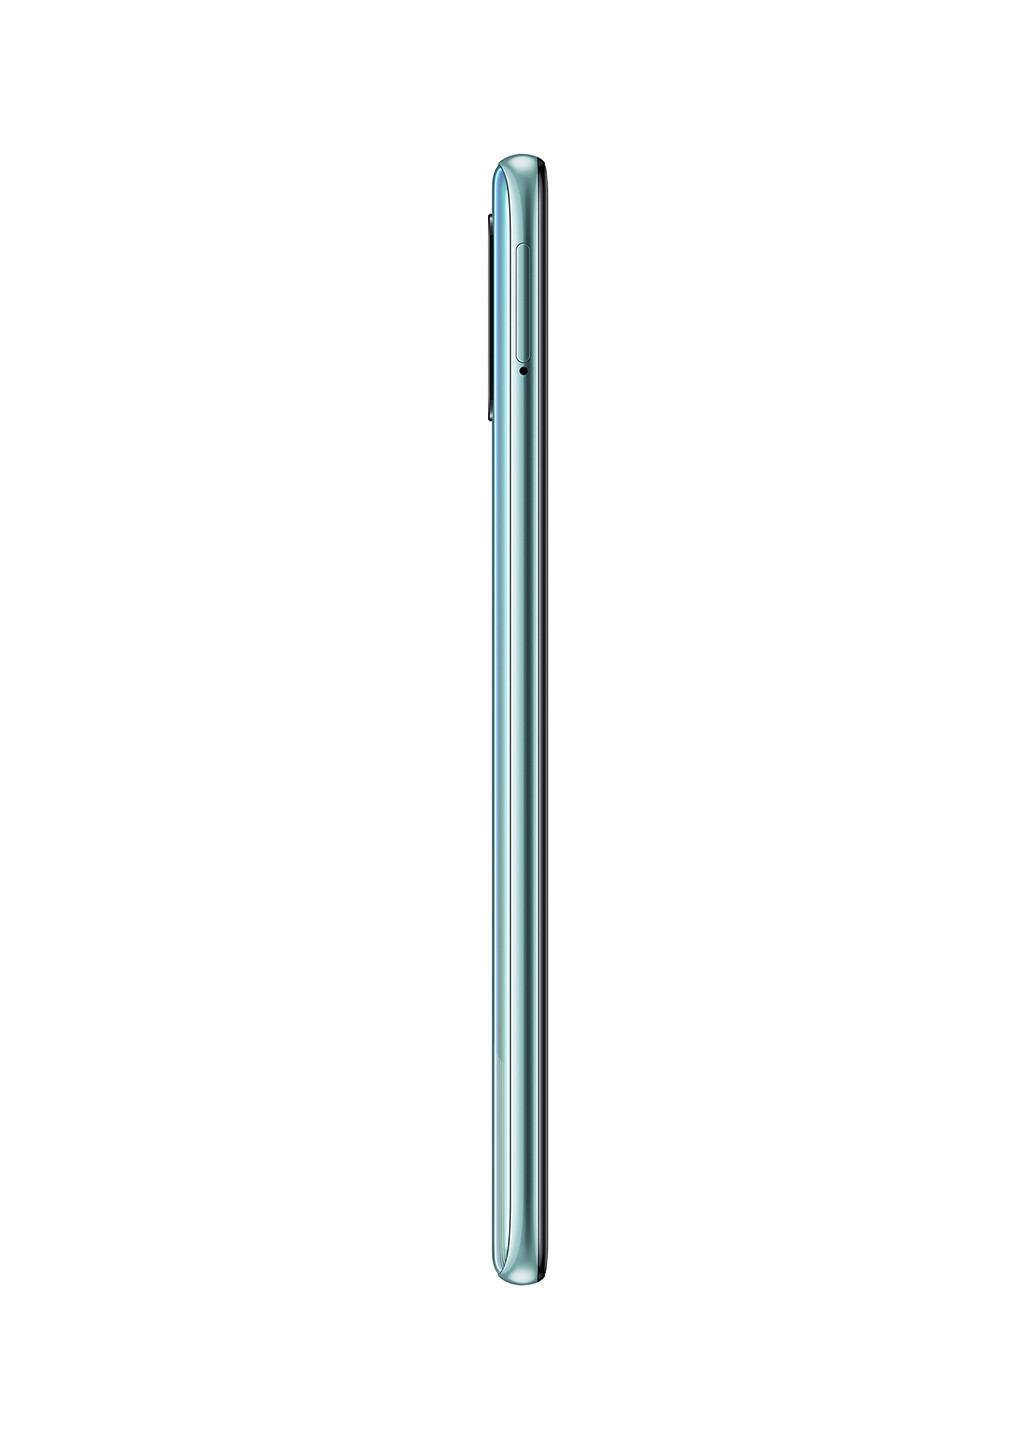 Смартфон Galaxy A51 6 / 128Gb Prism Crush Blue (SM-A515FZBWSEK) Samsung Galaxy A51 6/128Gb Prism Crush Blue (SM-A515FZBWSEK) синій